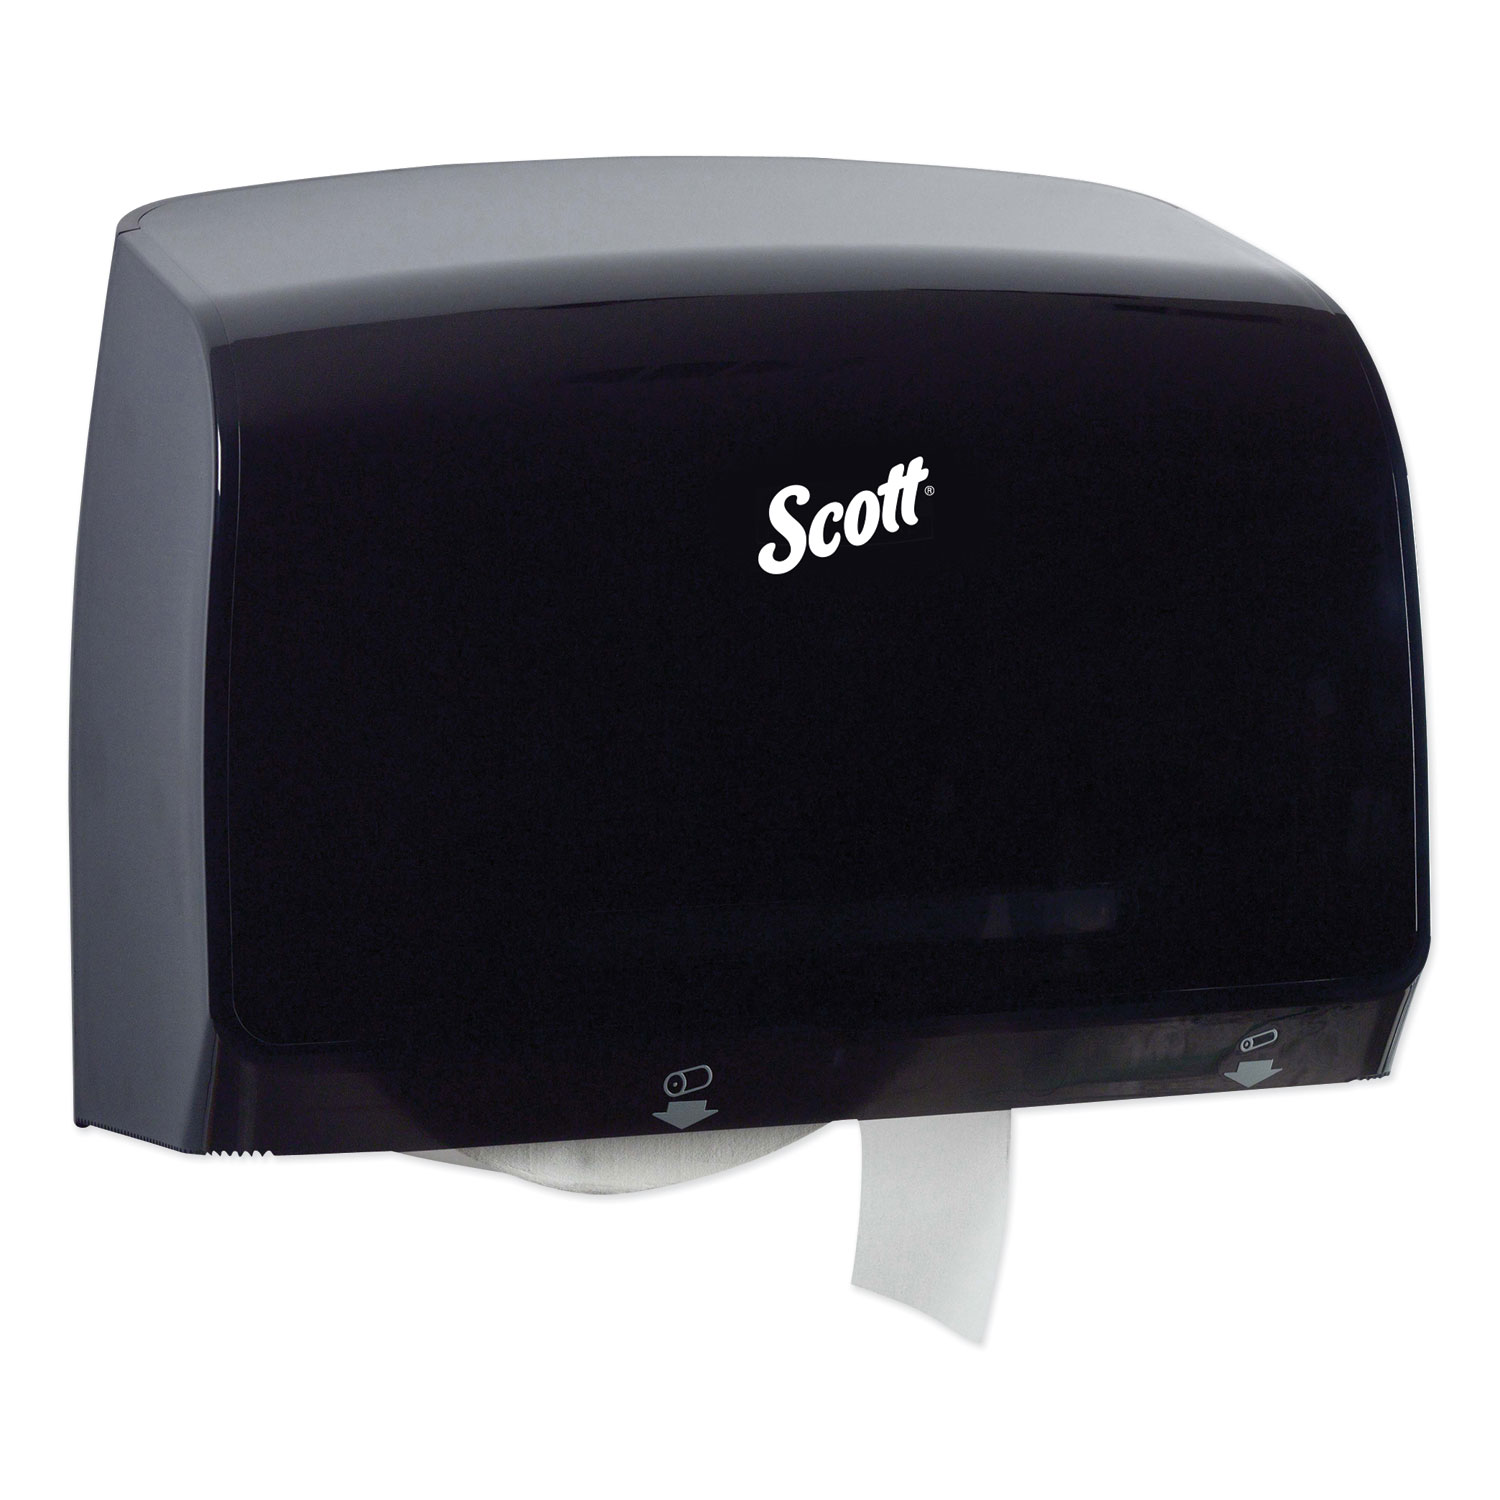  Scott 34831 Pro Coreless Jumbo Roll Tissue Dispenser, 14 1/10 x 5 4/5 x 10 2/5, Black (KCC34831) 